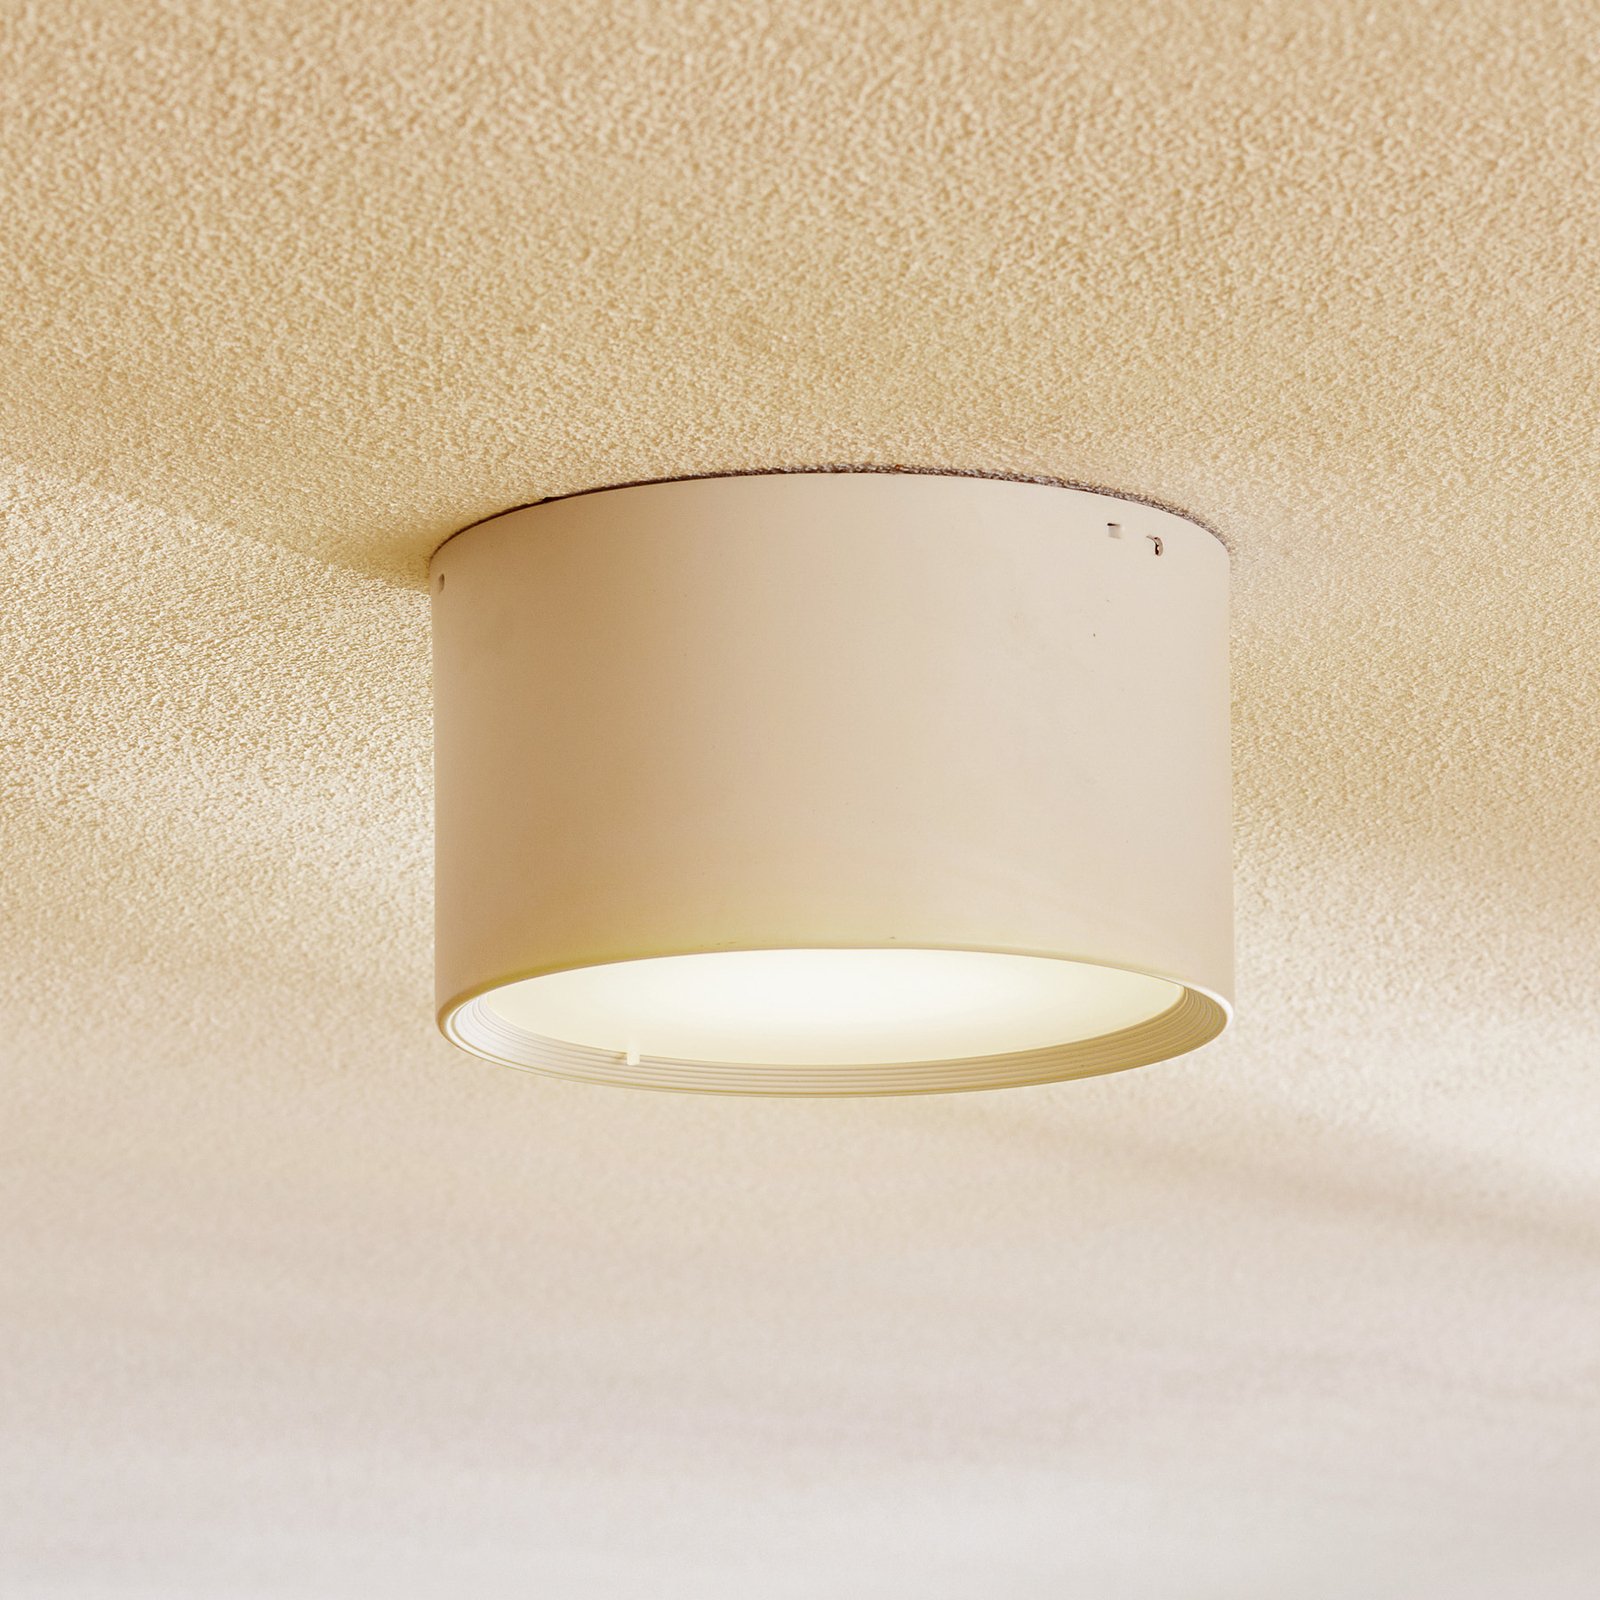 LED downlight Ita en blanc avec diffuseur, Ø 15 cm